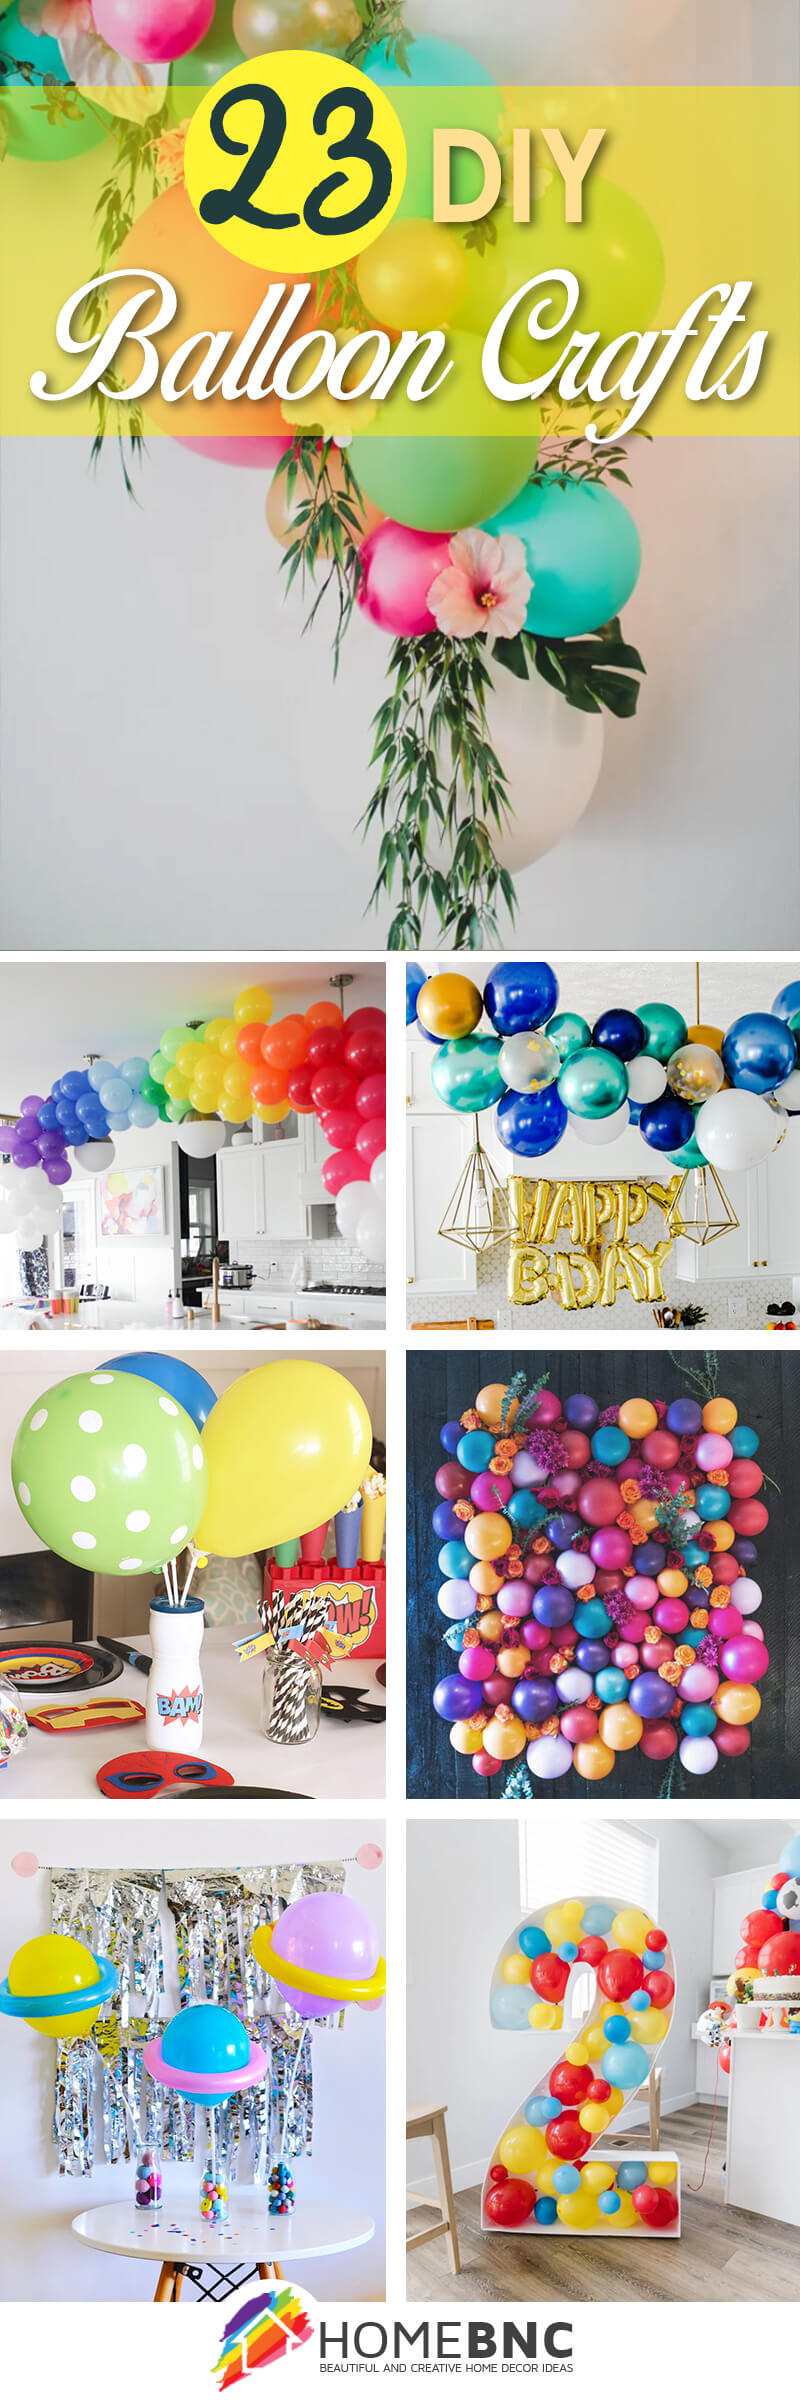 DalvayDelights Peppa Pig Cake Polka Dots 15 Piece Happy Birthday Party  Balloons Decorations Supplies Set - Walmart.com